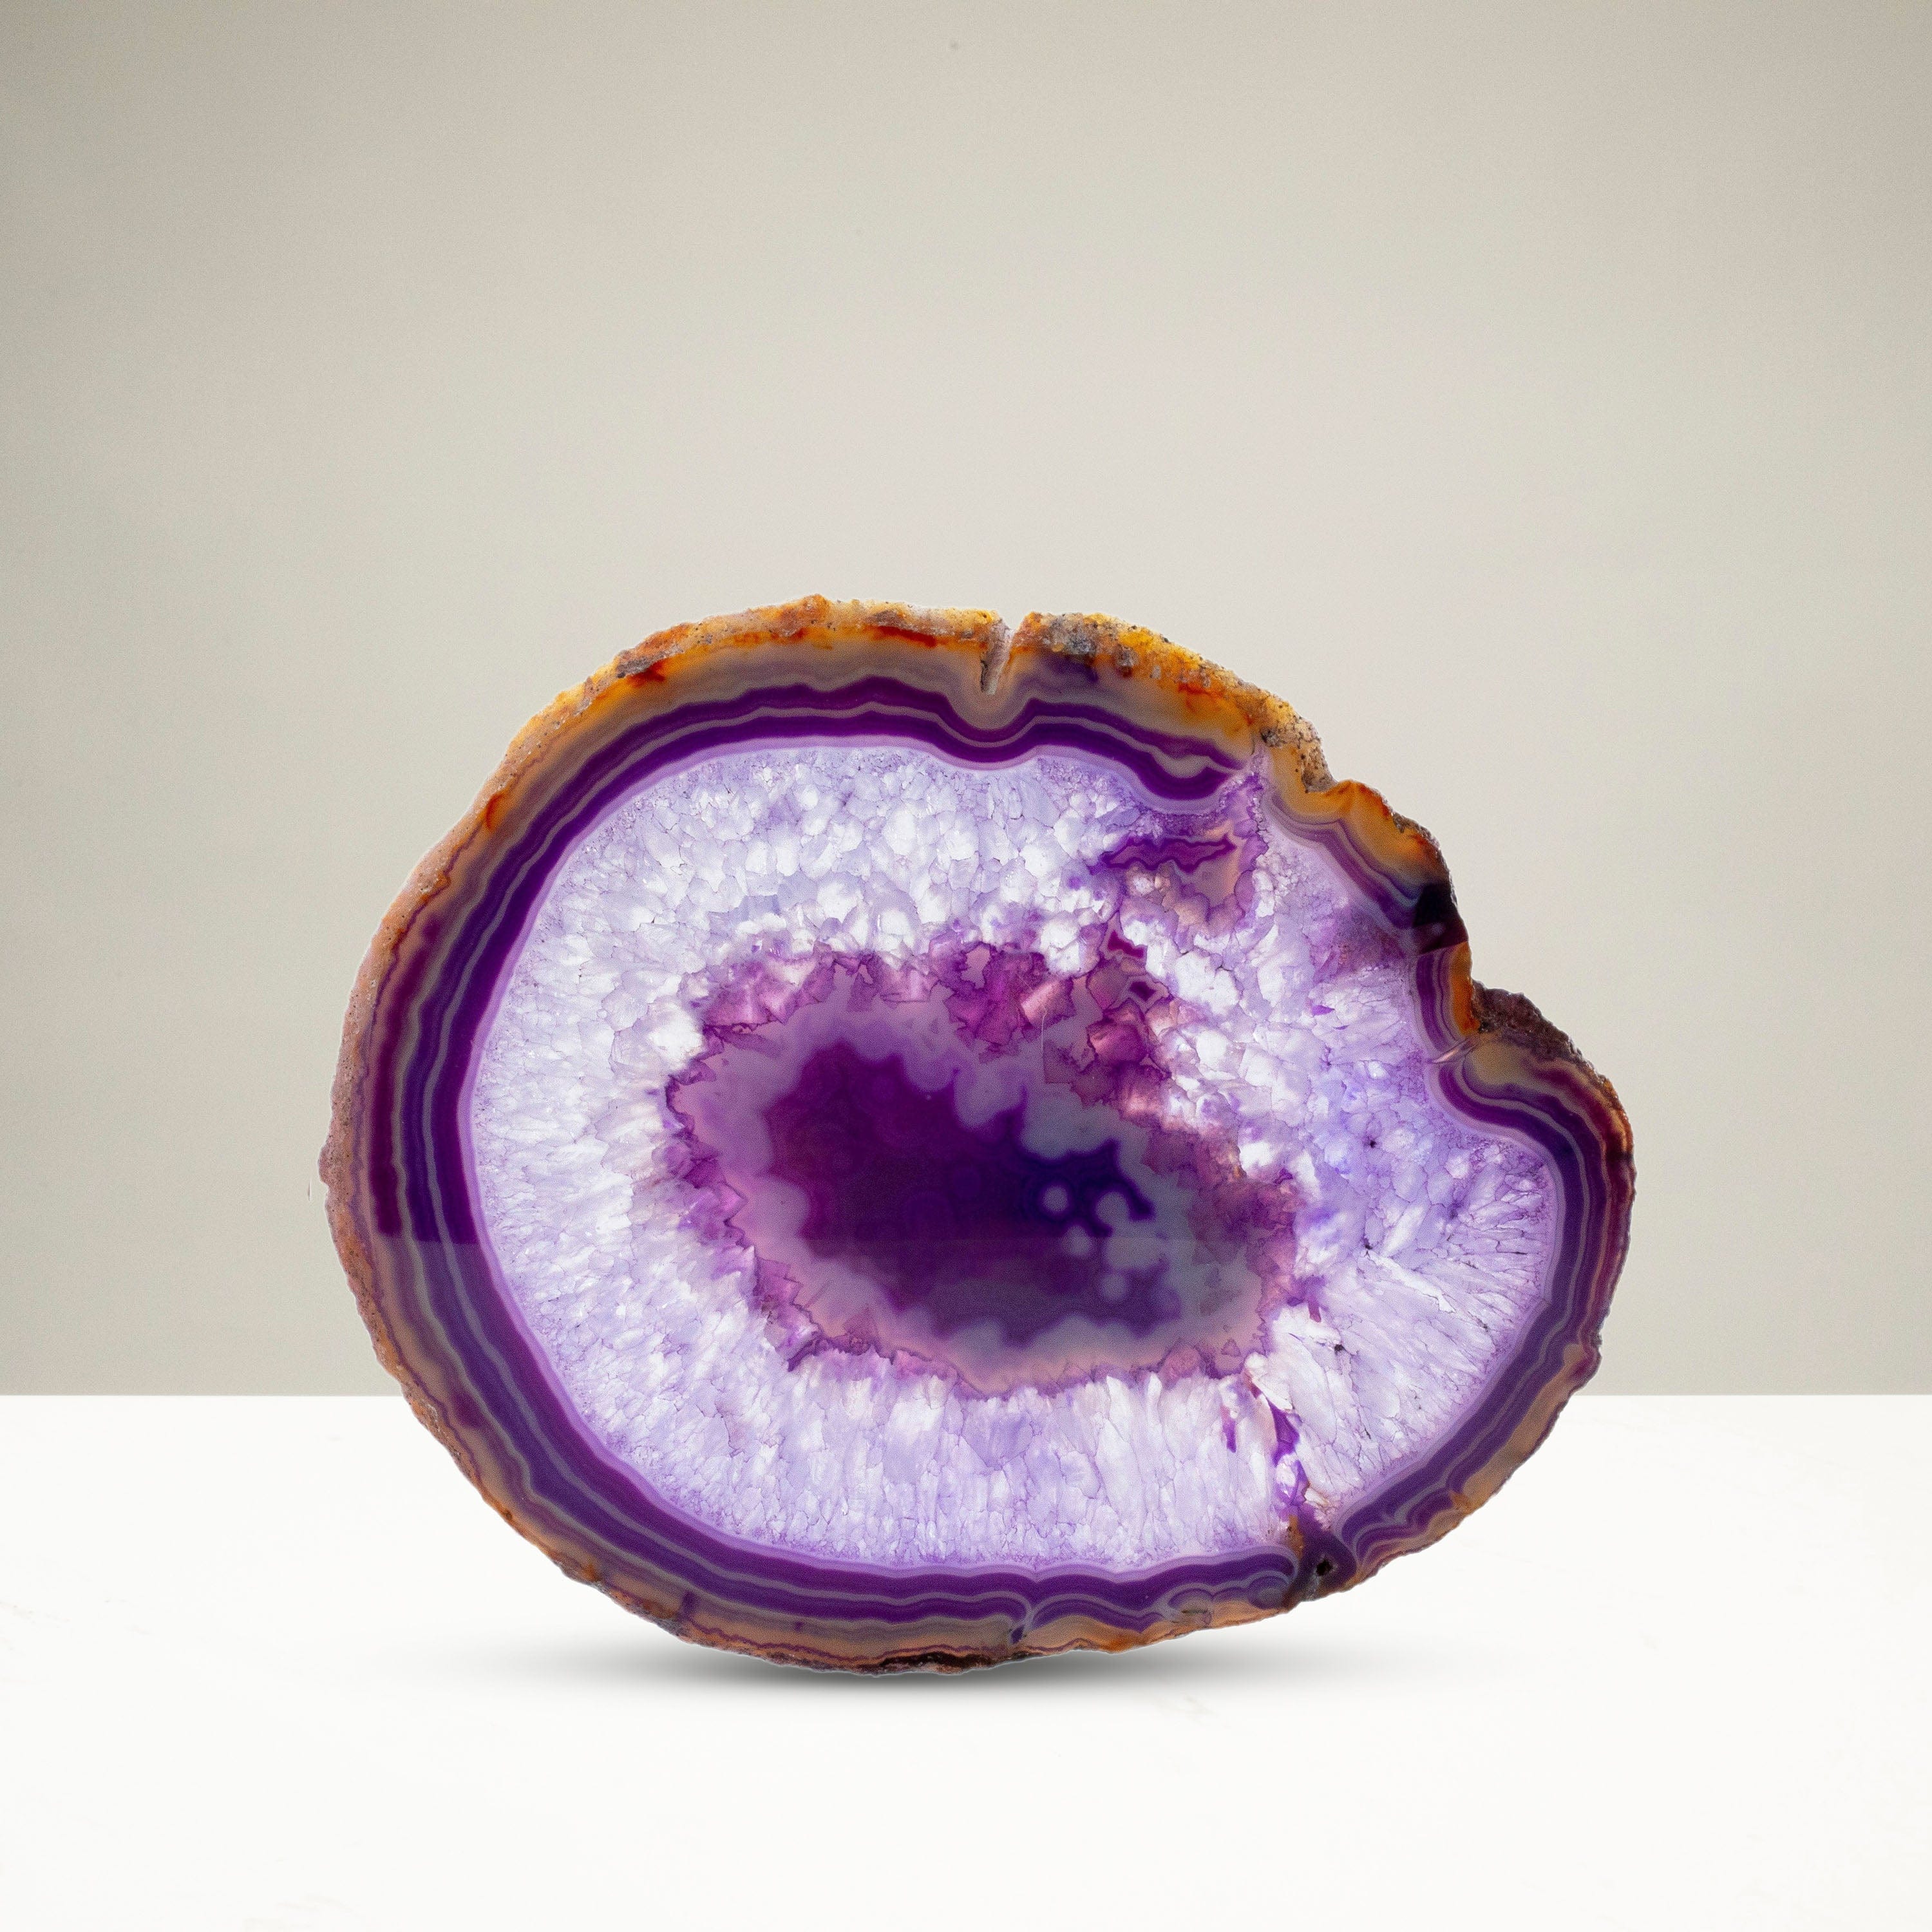 KALIFANO Agate Purple Agate Slice Drink Coaster BAS160-PE